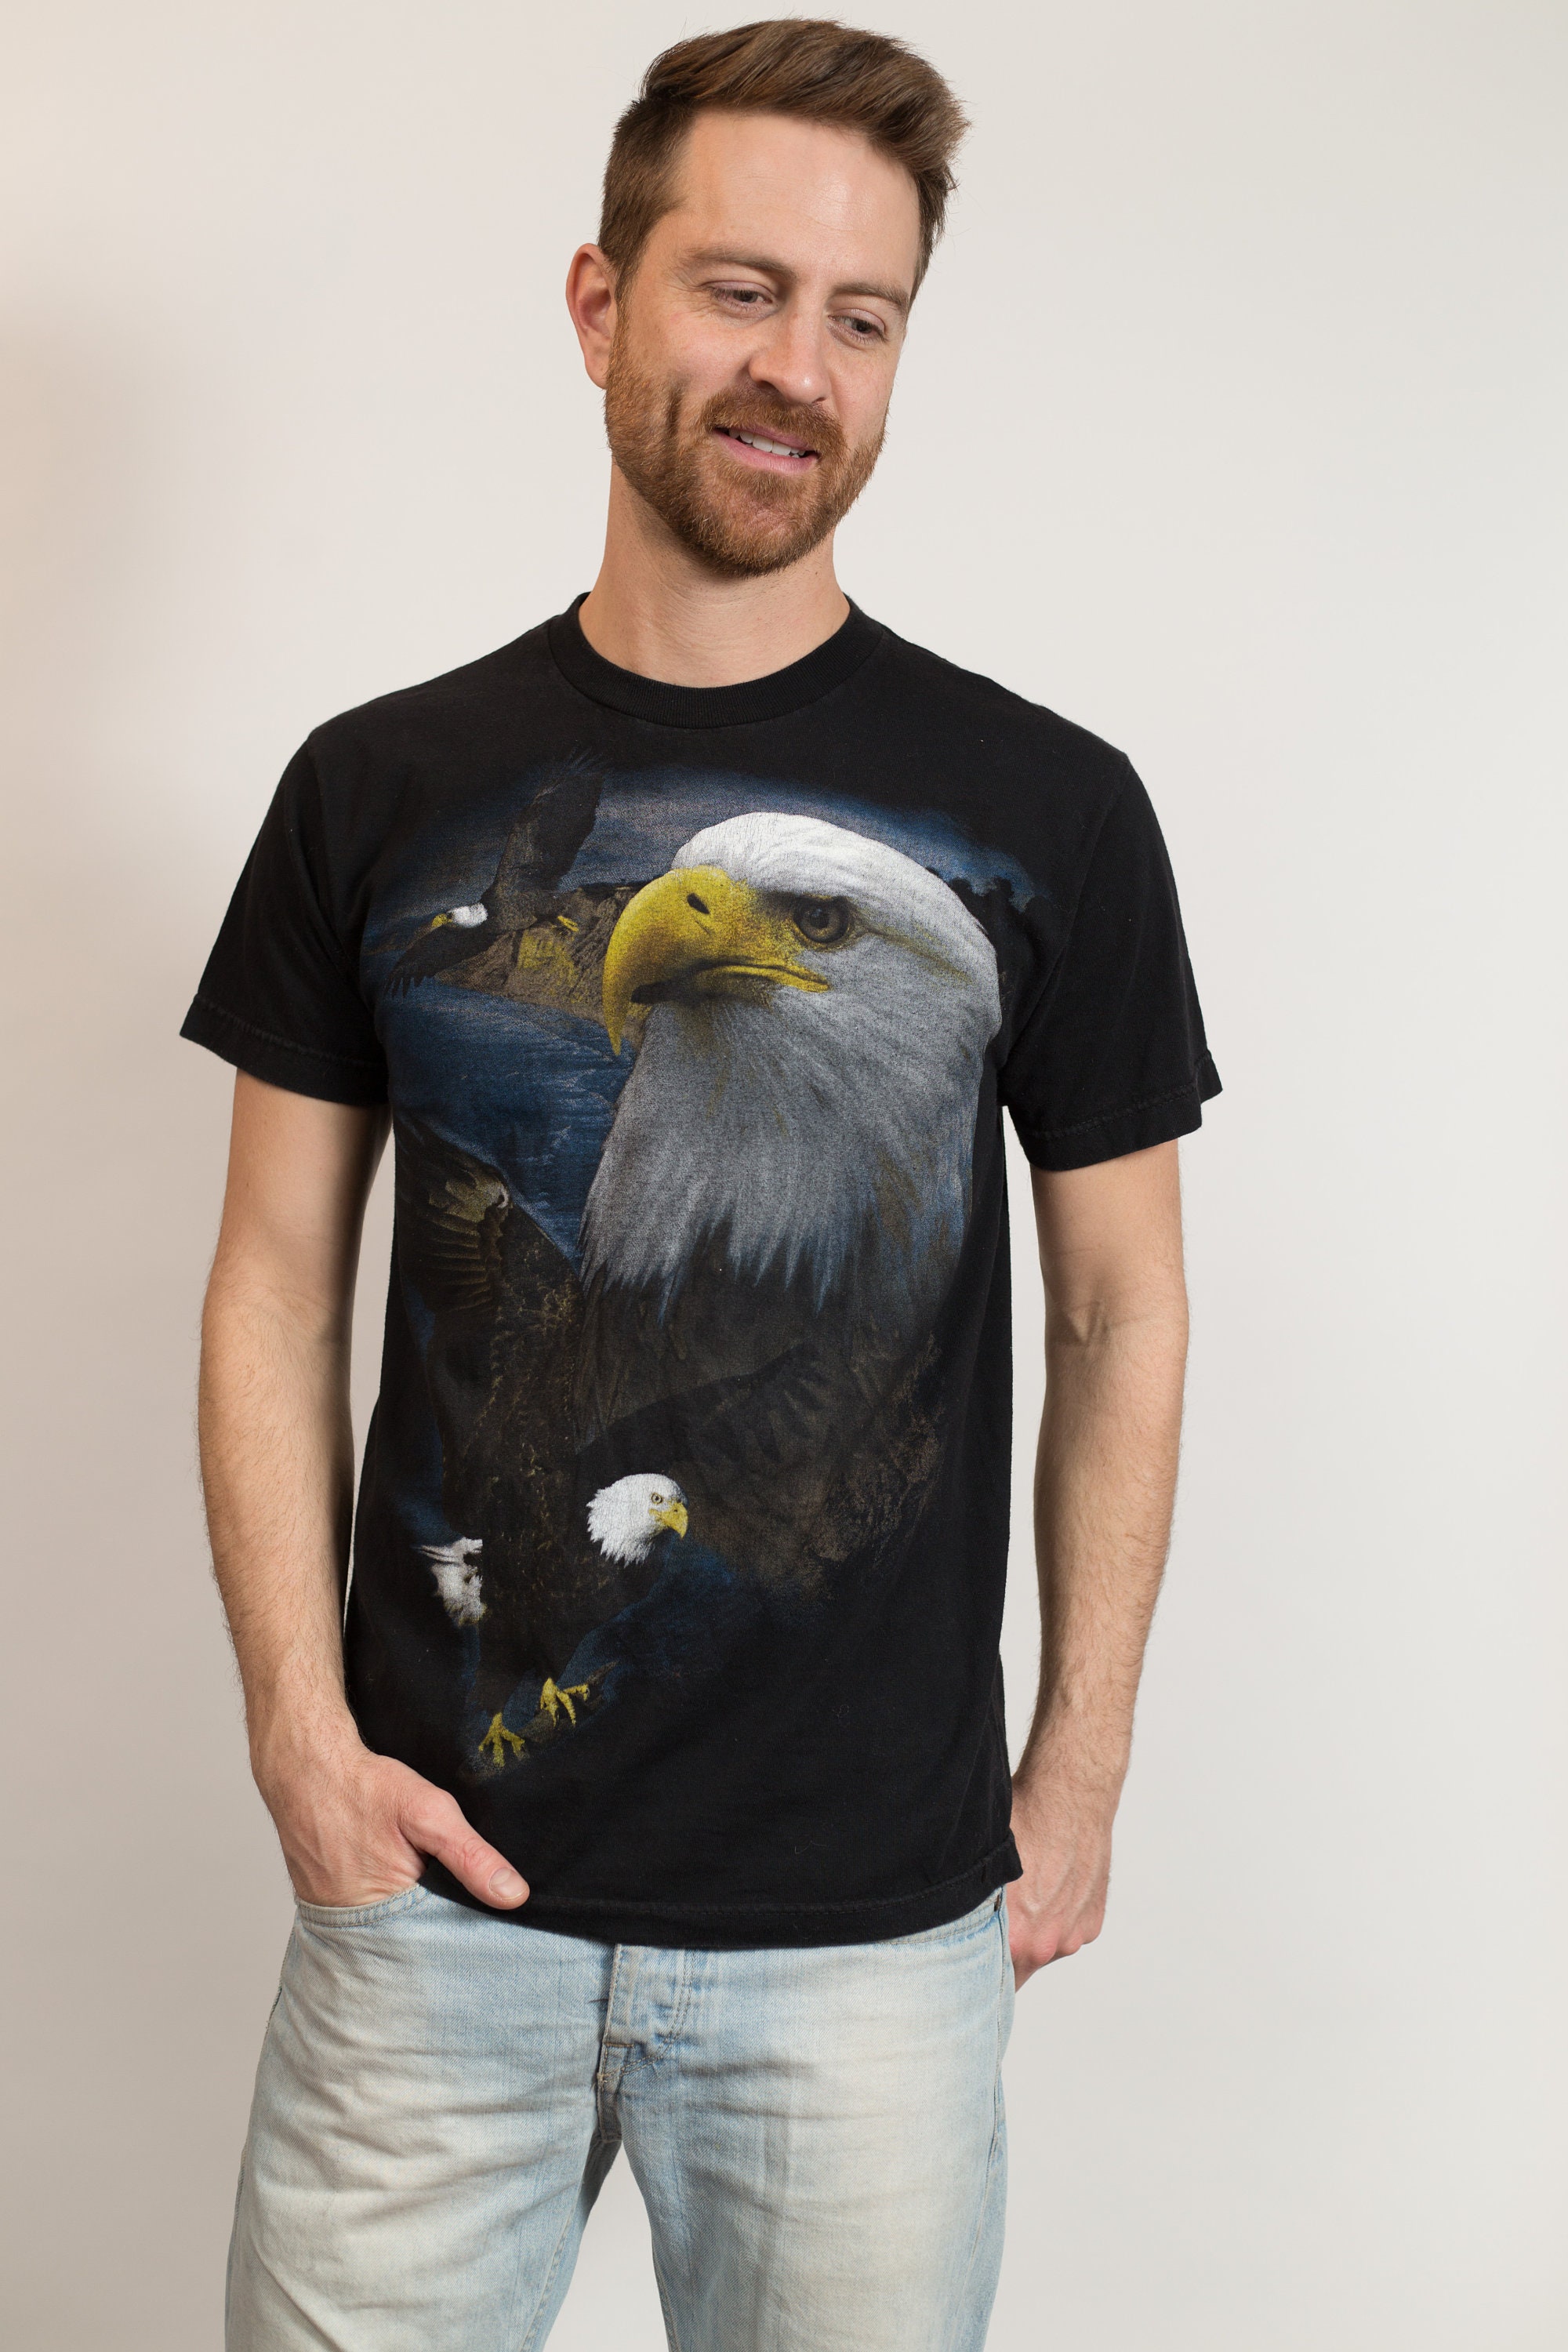 Vintage Men's Eagle T-Shirt Black Colored Small Size | Etsy